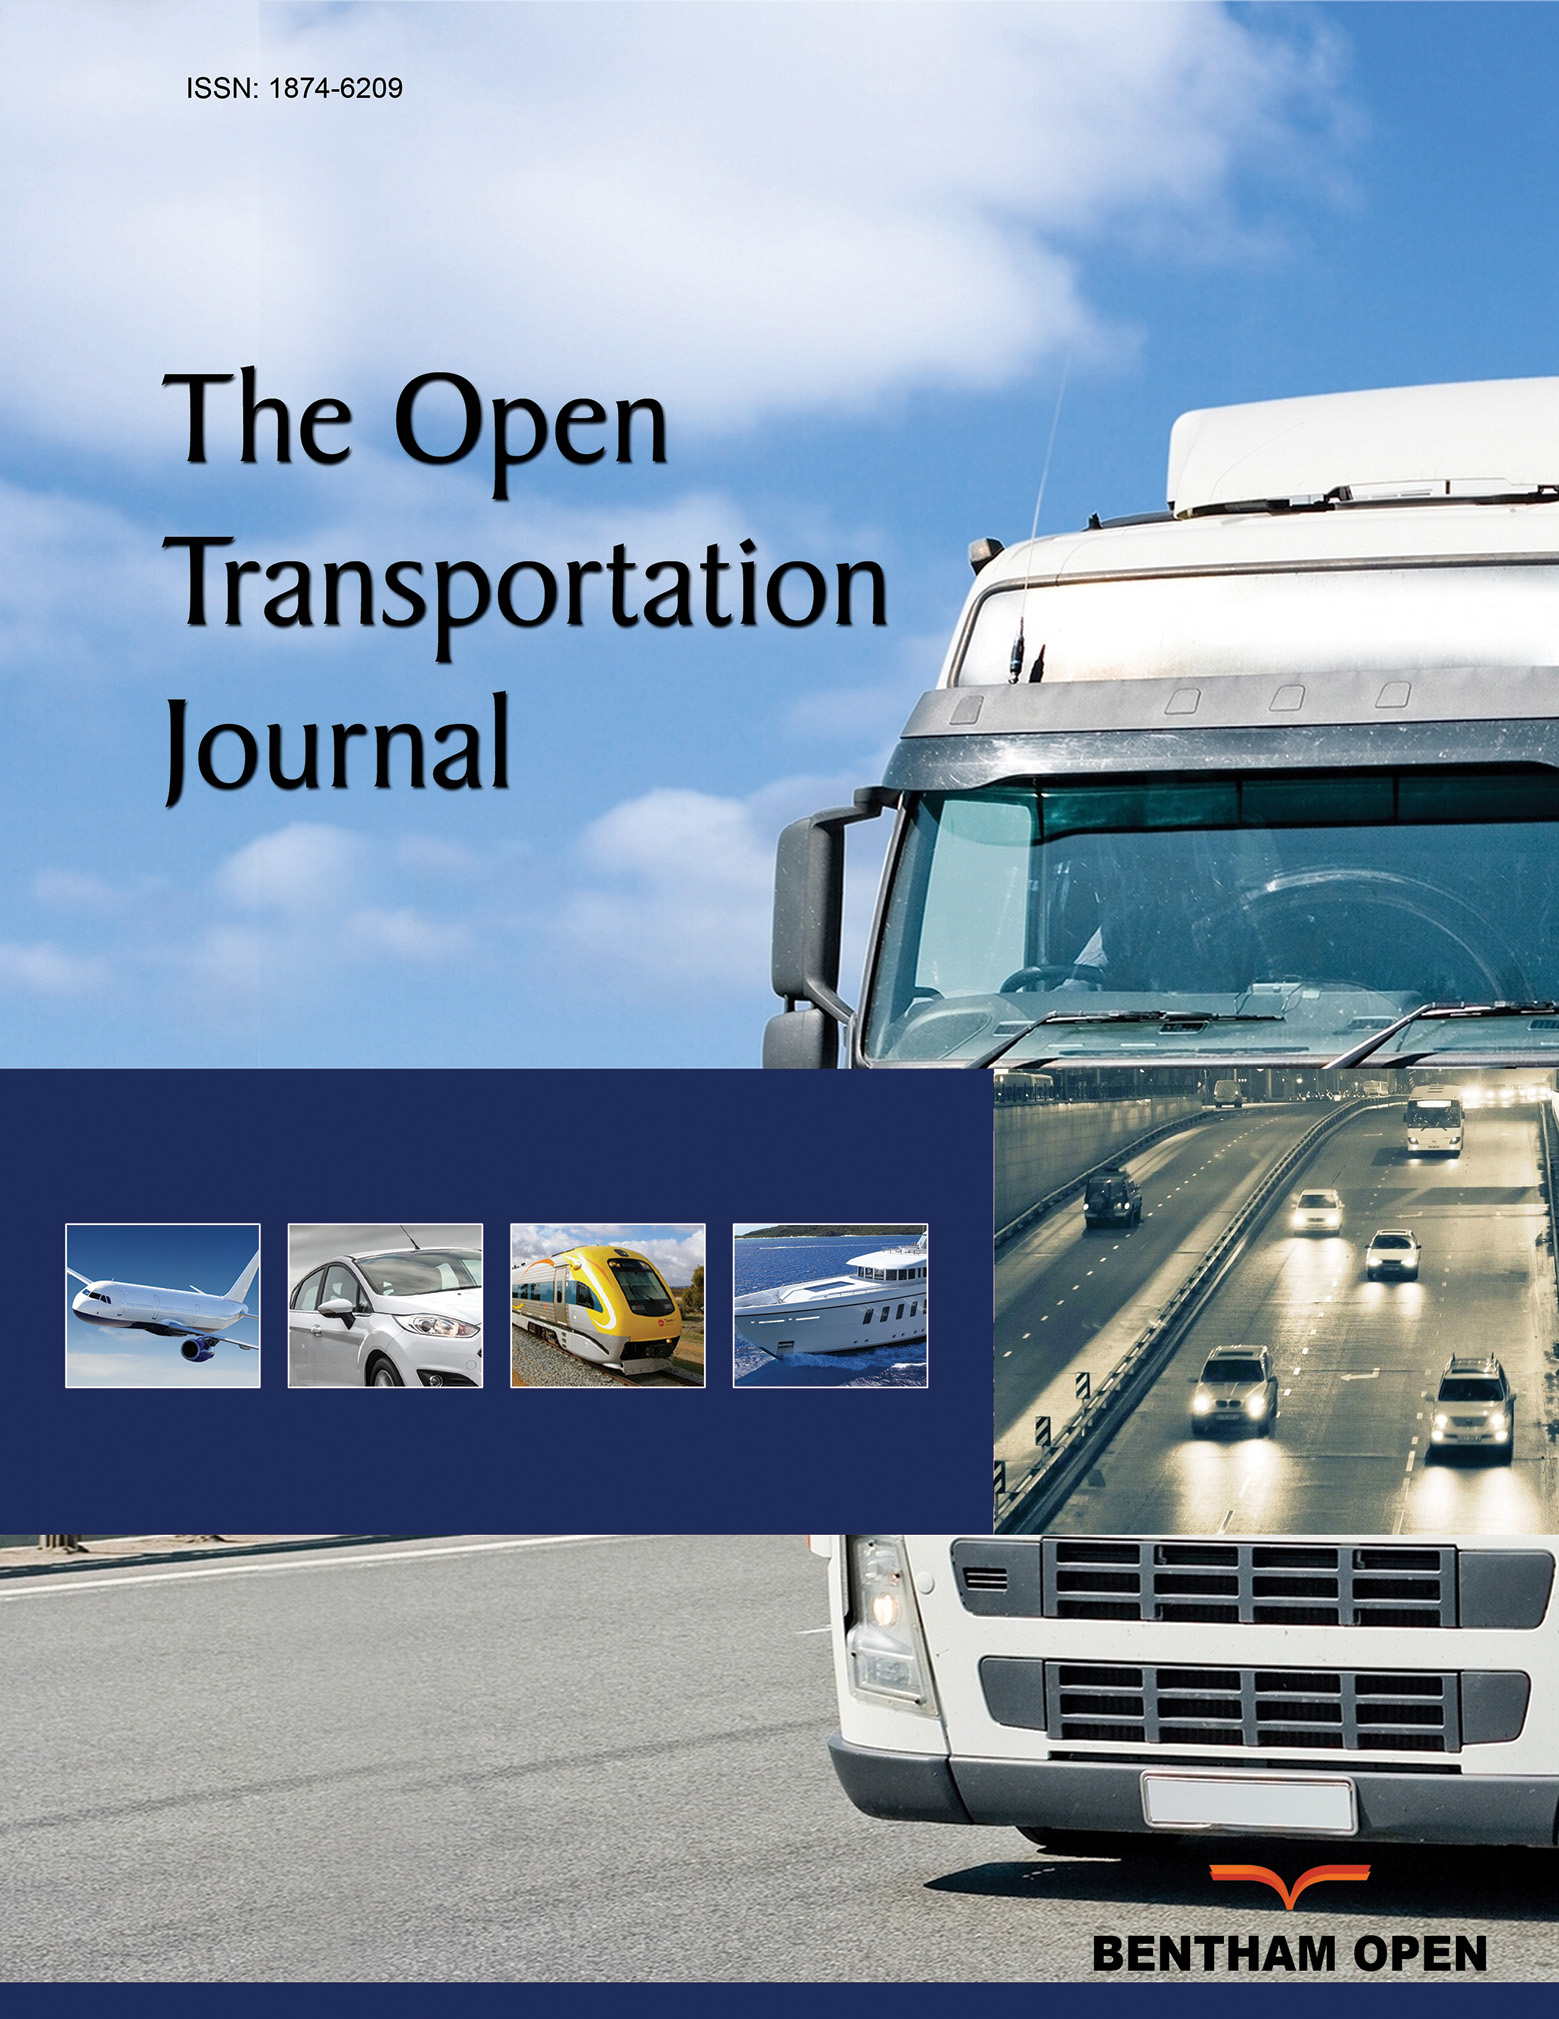 The Open Transportation Journal